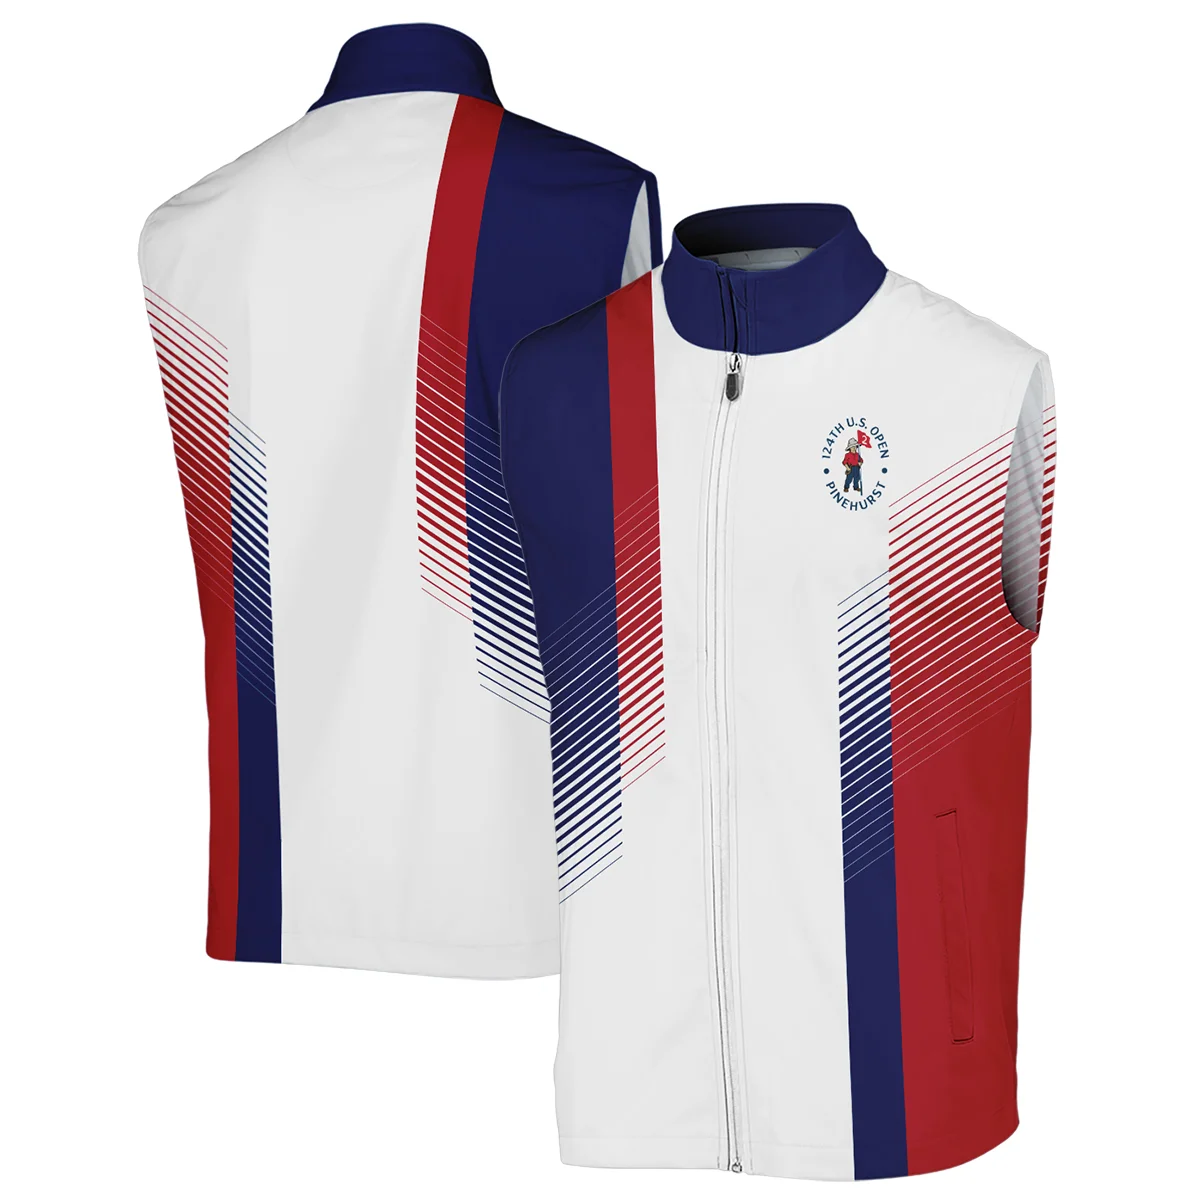 124th U.S. Open Pinehurst Sports Ping Zipper Polo Shirt Golf Blue Red All Over Print Zipper Polo Shirt For Men